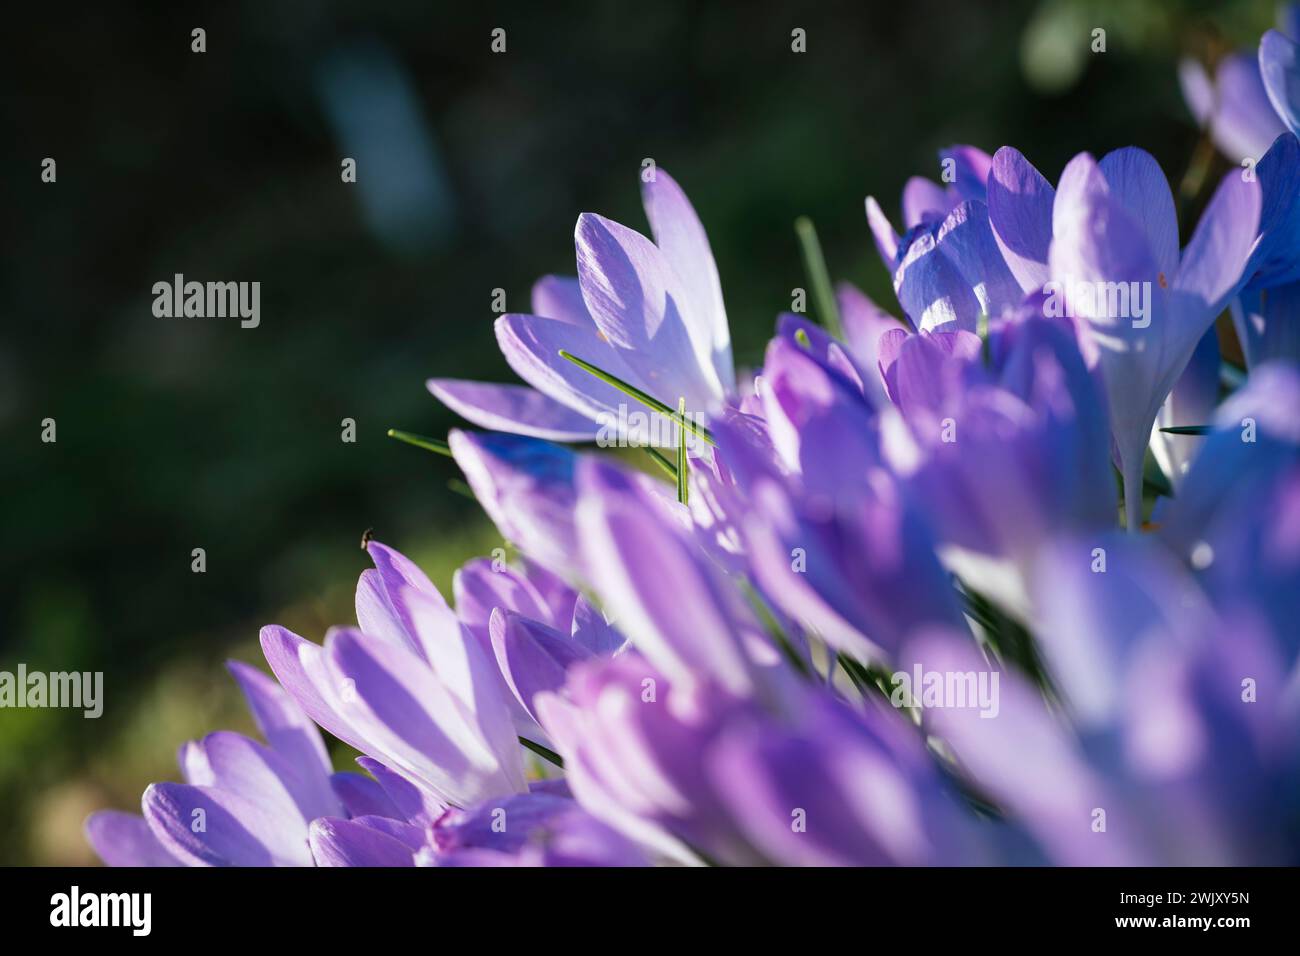 Crocus flowers in February Stock Photo